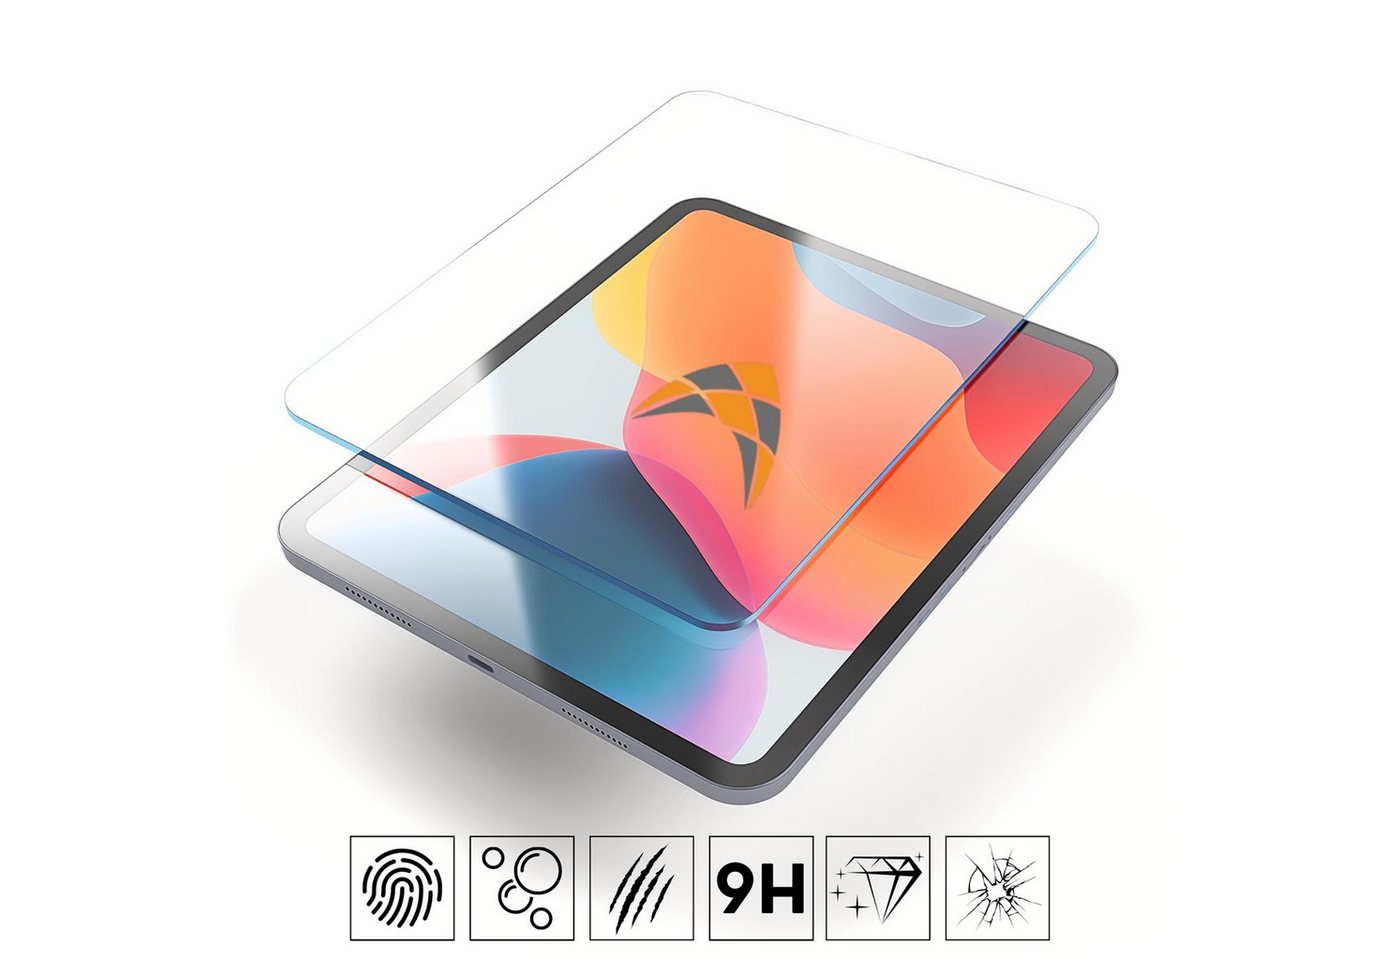 CoolGadget Schutzfolie Panzerfolie für iPad Pro 9.7, (9H+ Hartglas, Bubble Free), Panzerglas Schutzfolie für Apple iPad Pro 9.7 Folie von CoolGadget